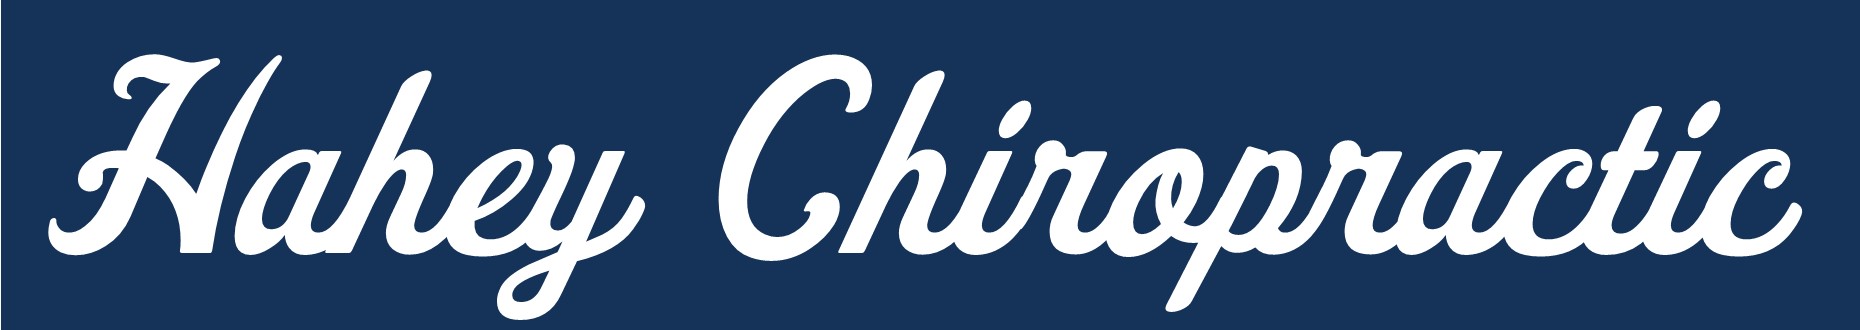 Hahey Chiropractic Logo